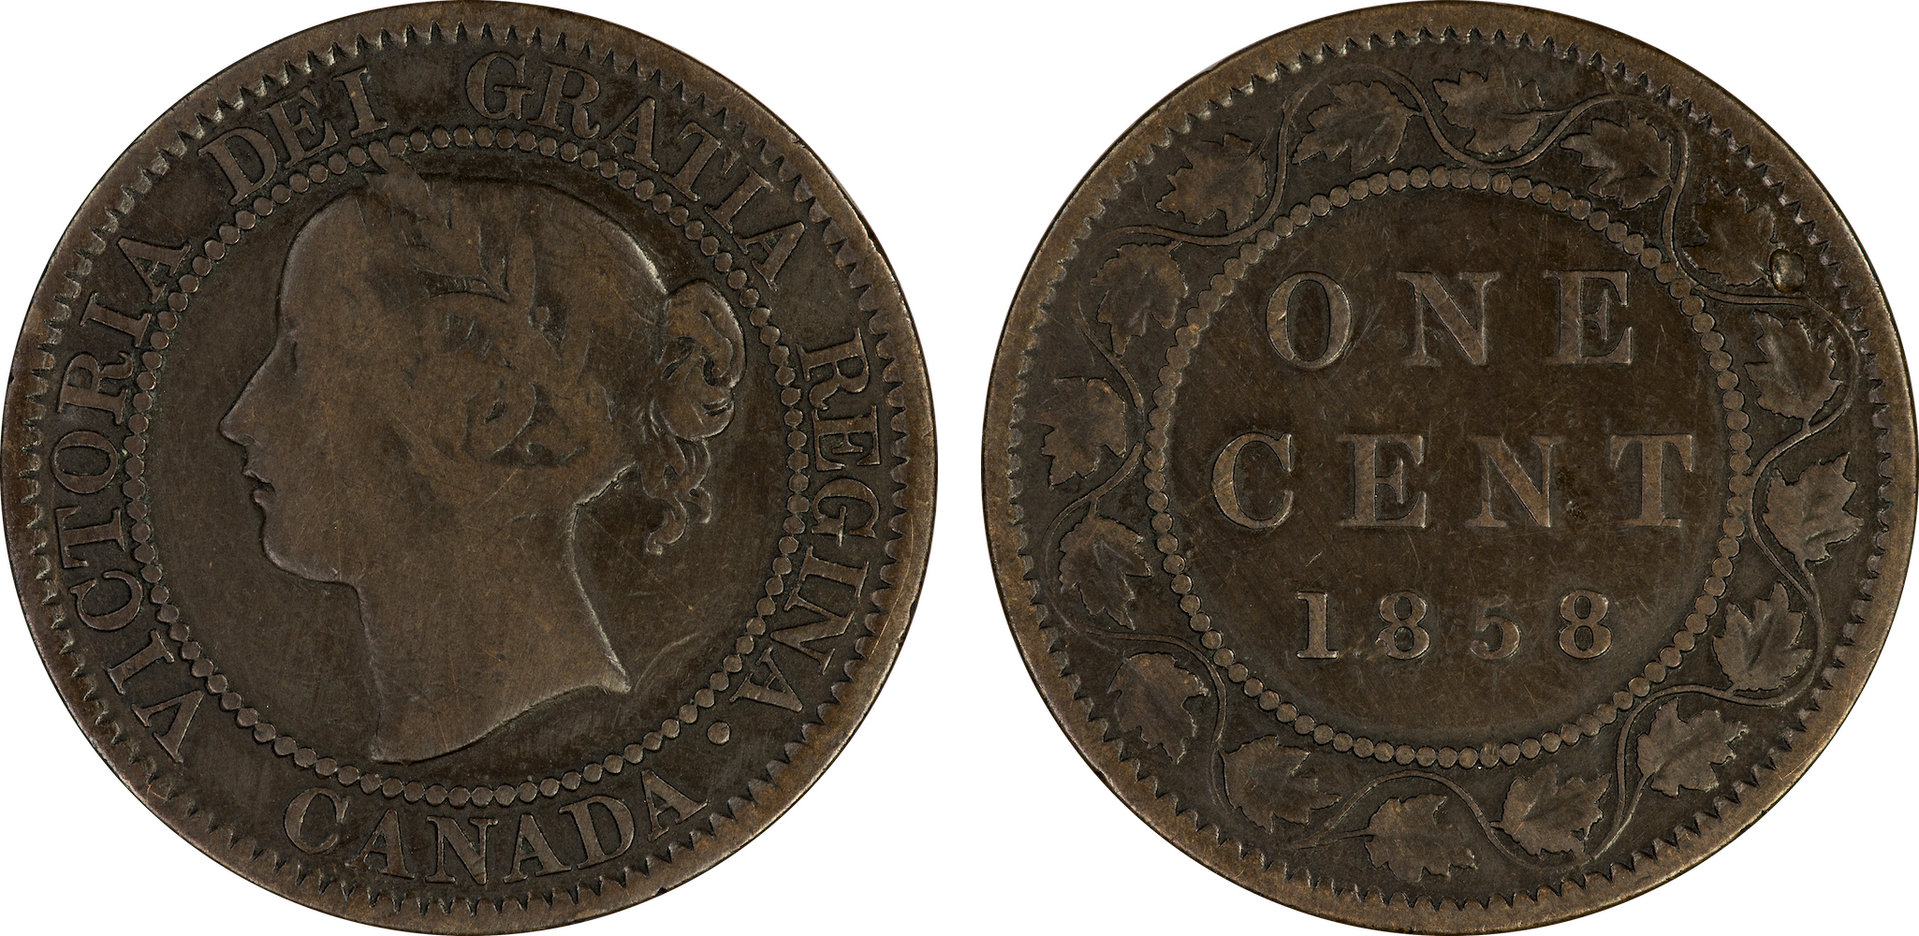 Canada - 1858 Cent 2.jpg